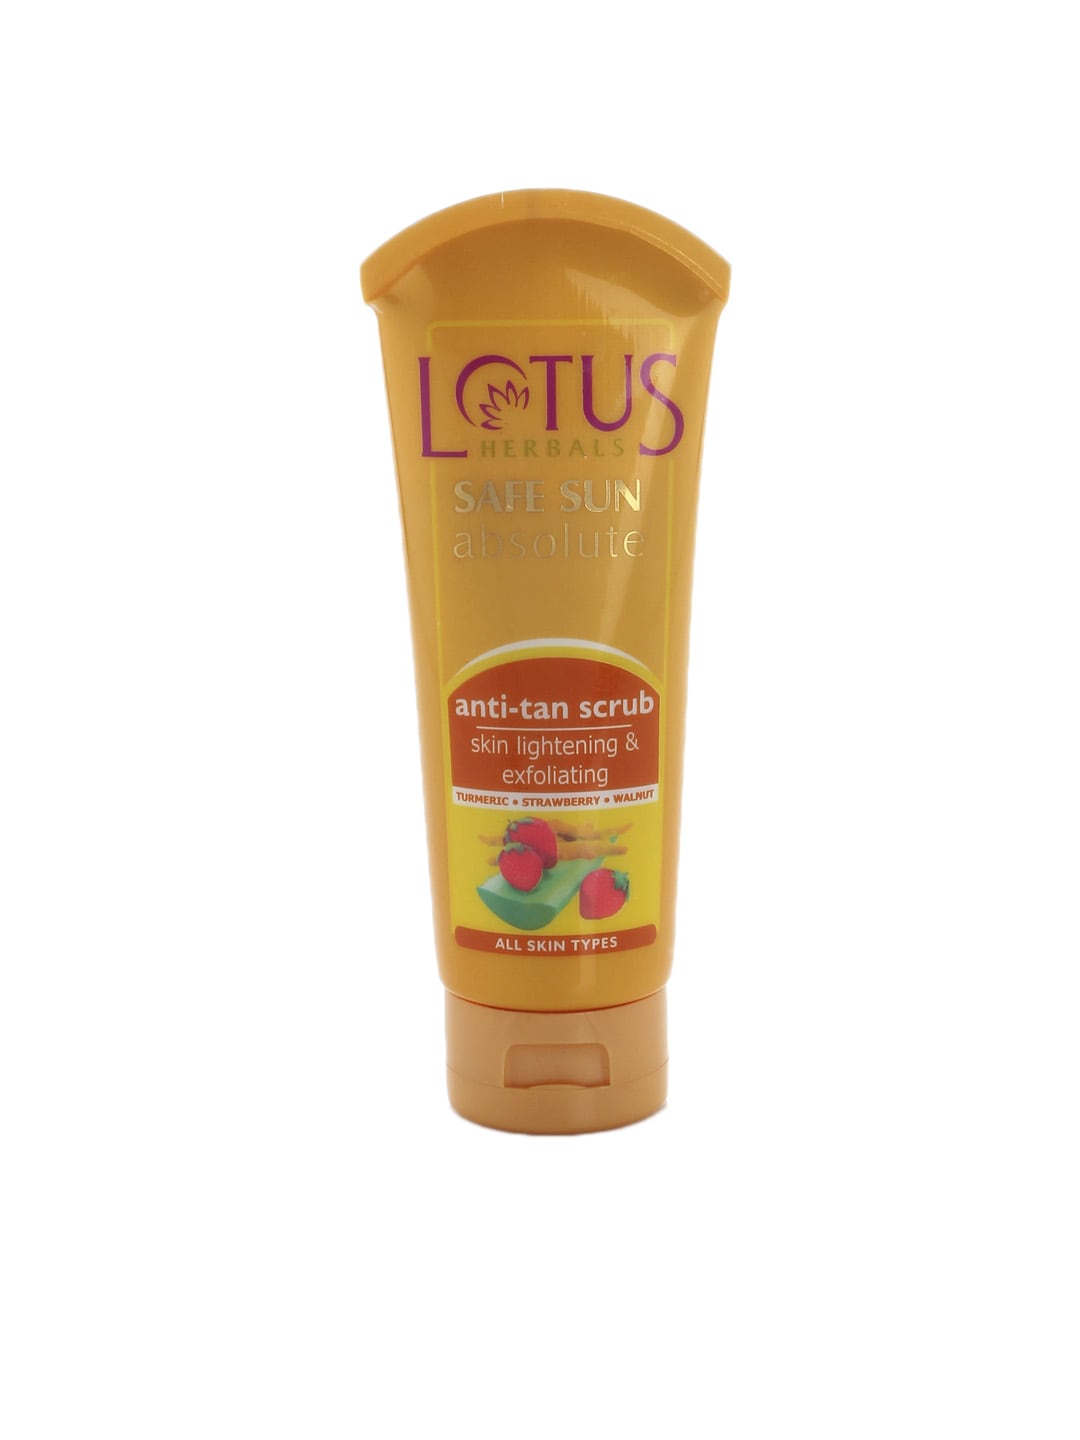 Lotus Herbals Safe Sun Absolute Anti Tan Scrub